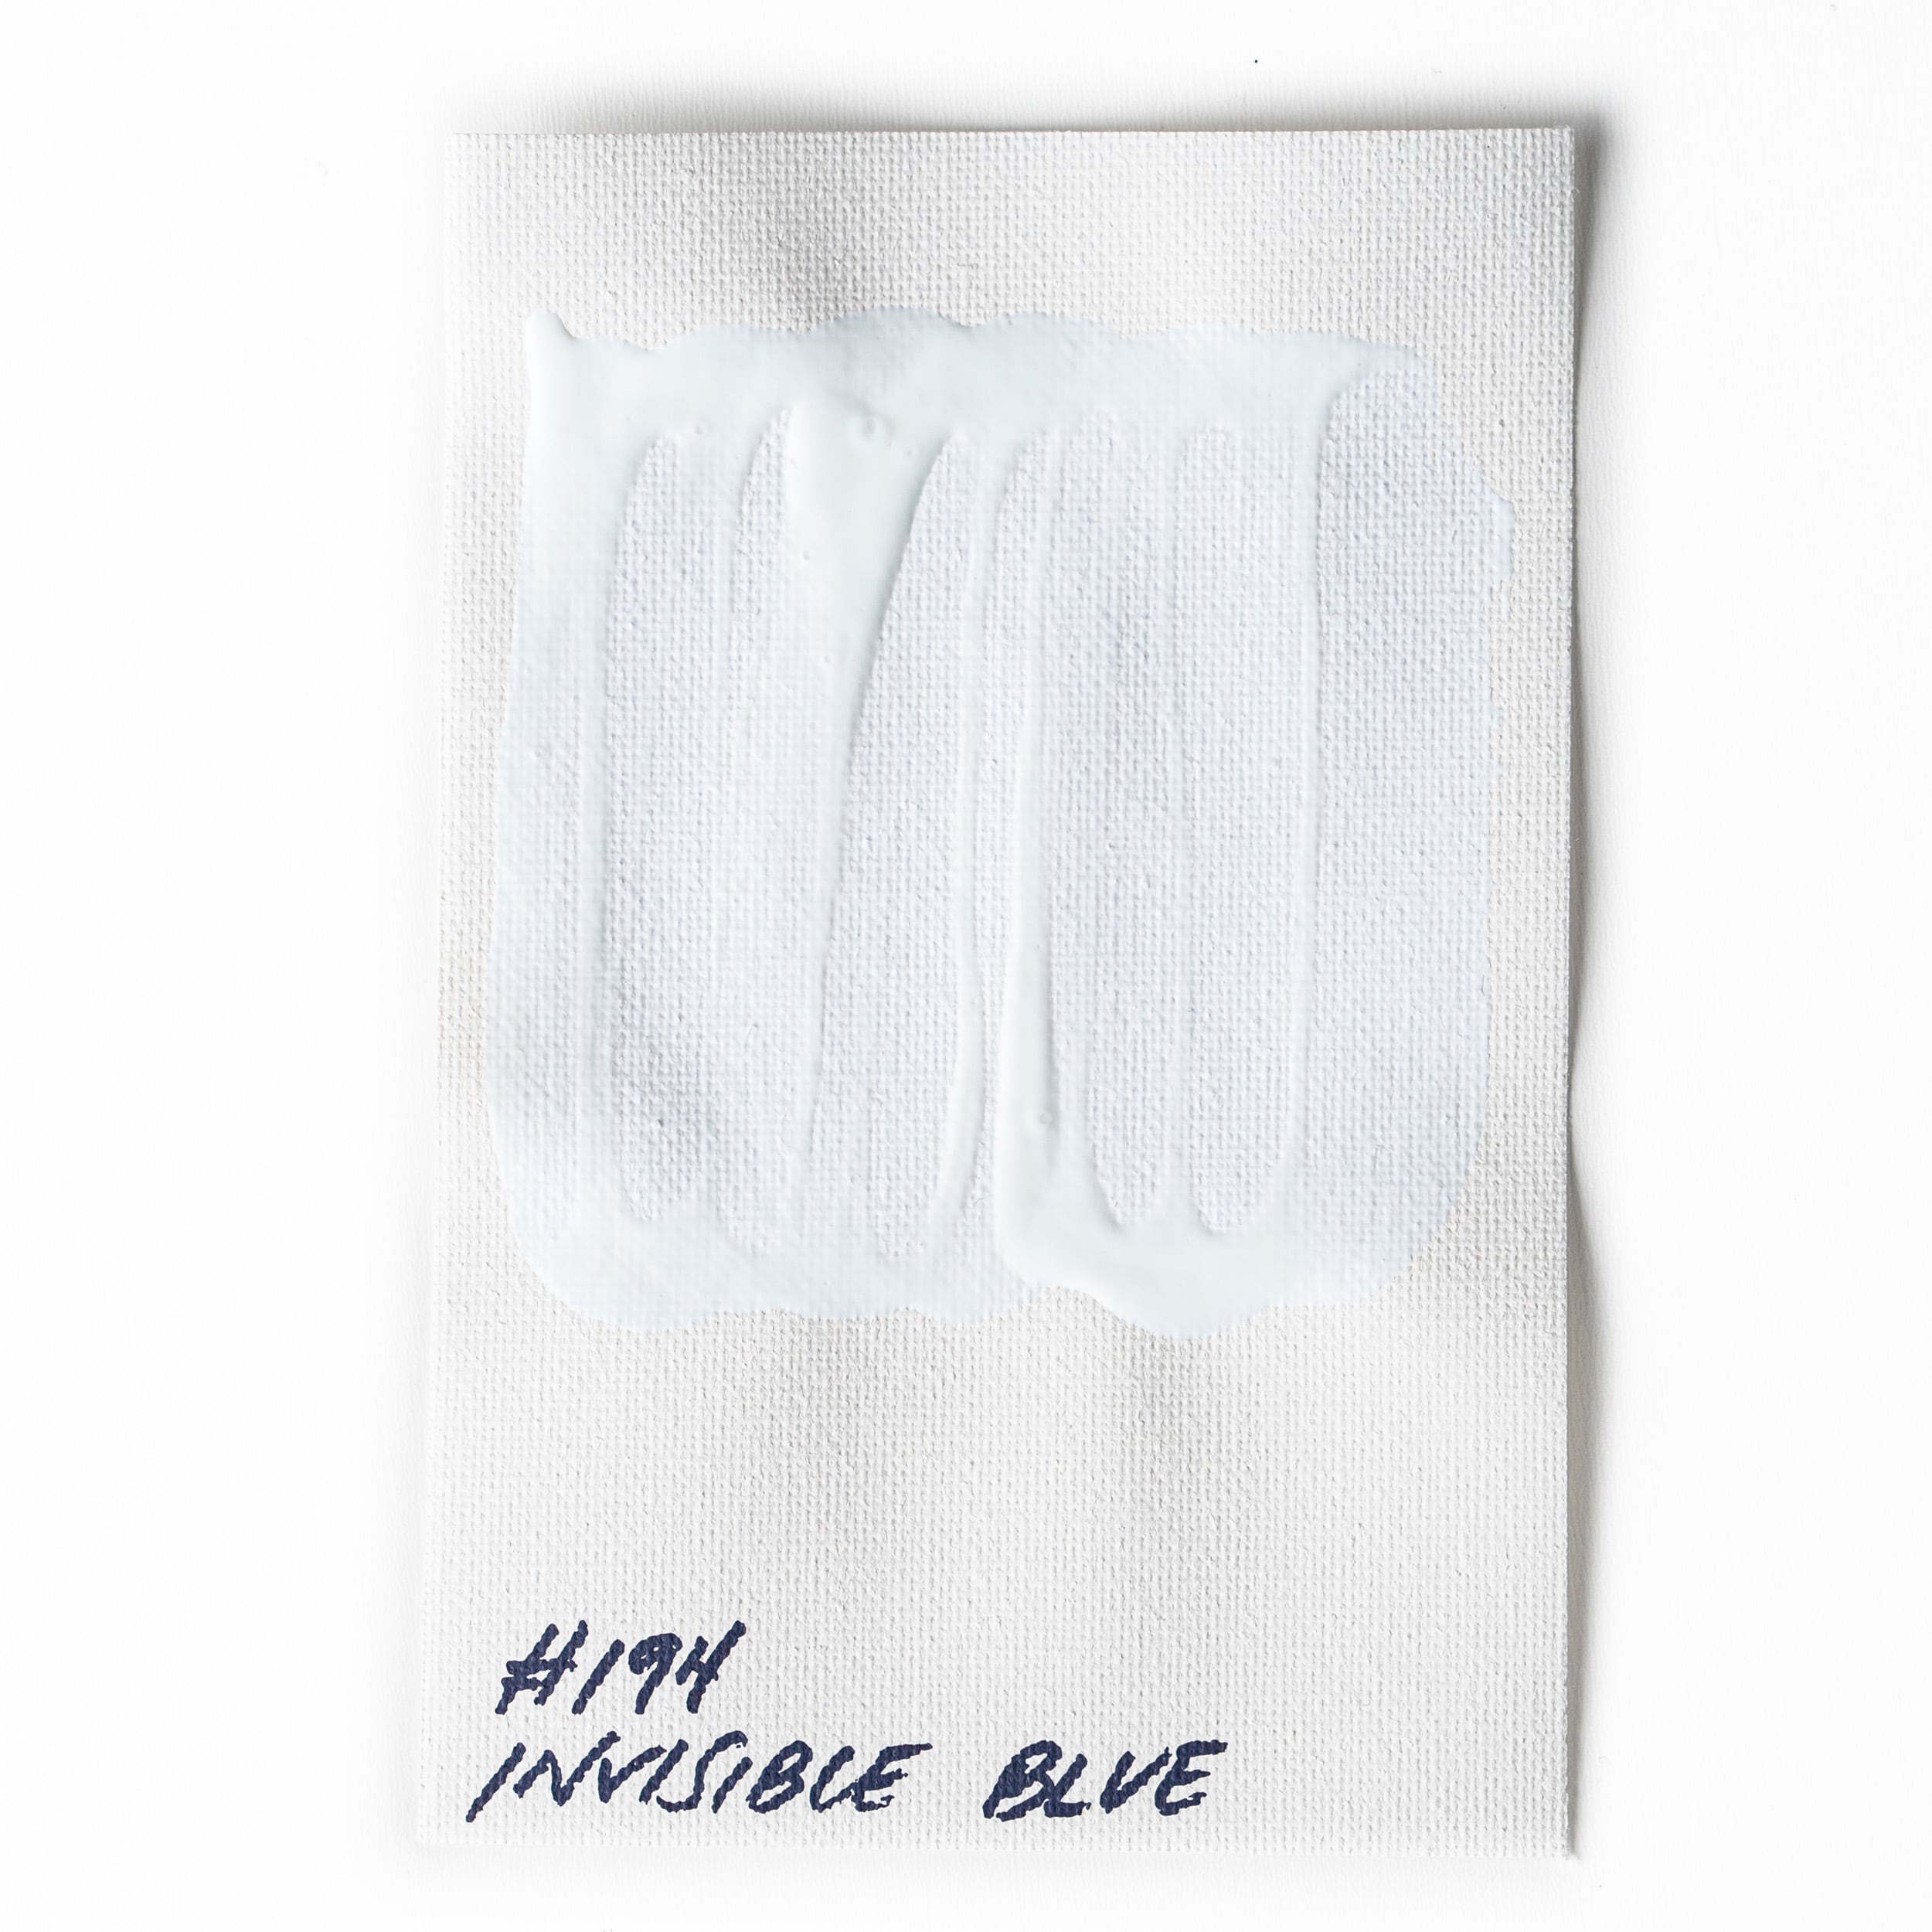 Buy #194 Fluorescent Invisible Blue - Lightfastness